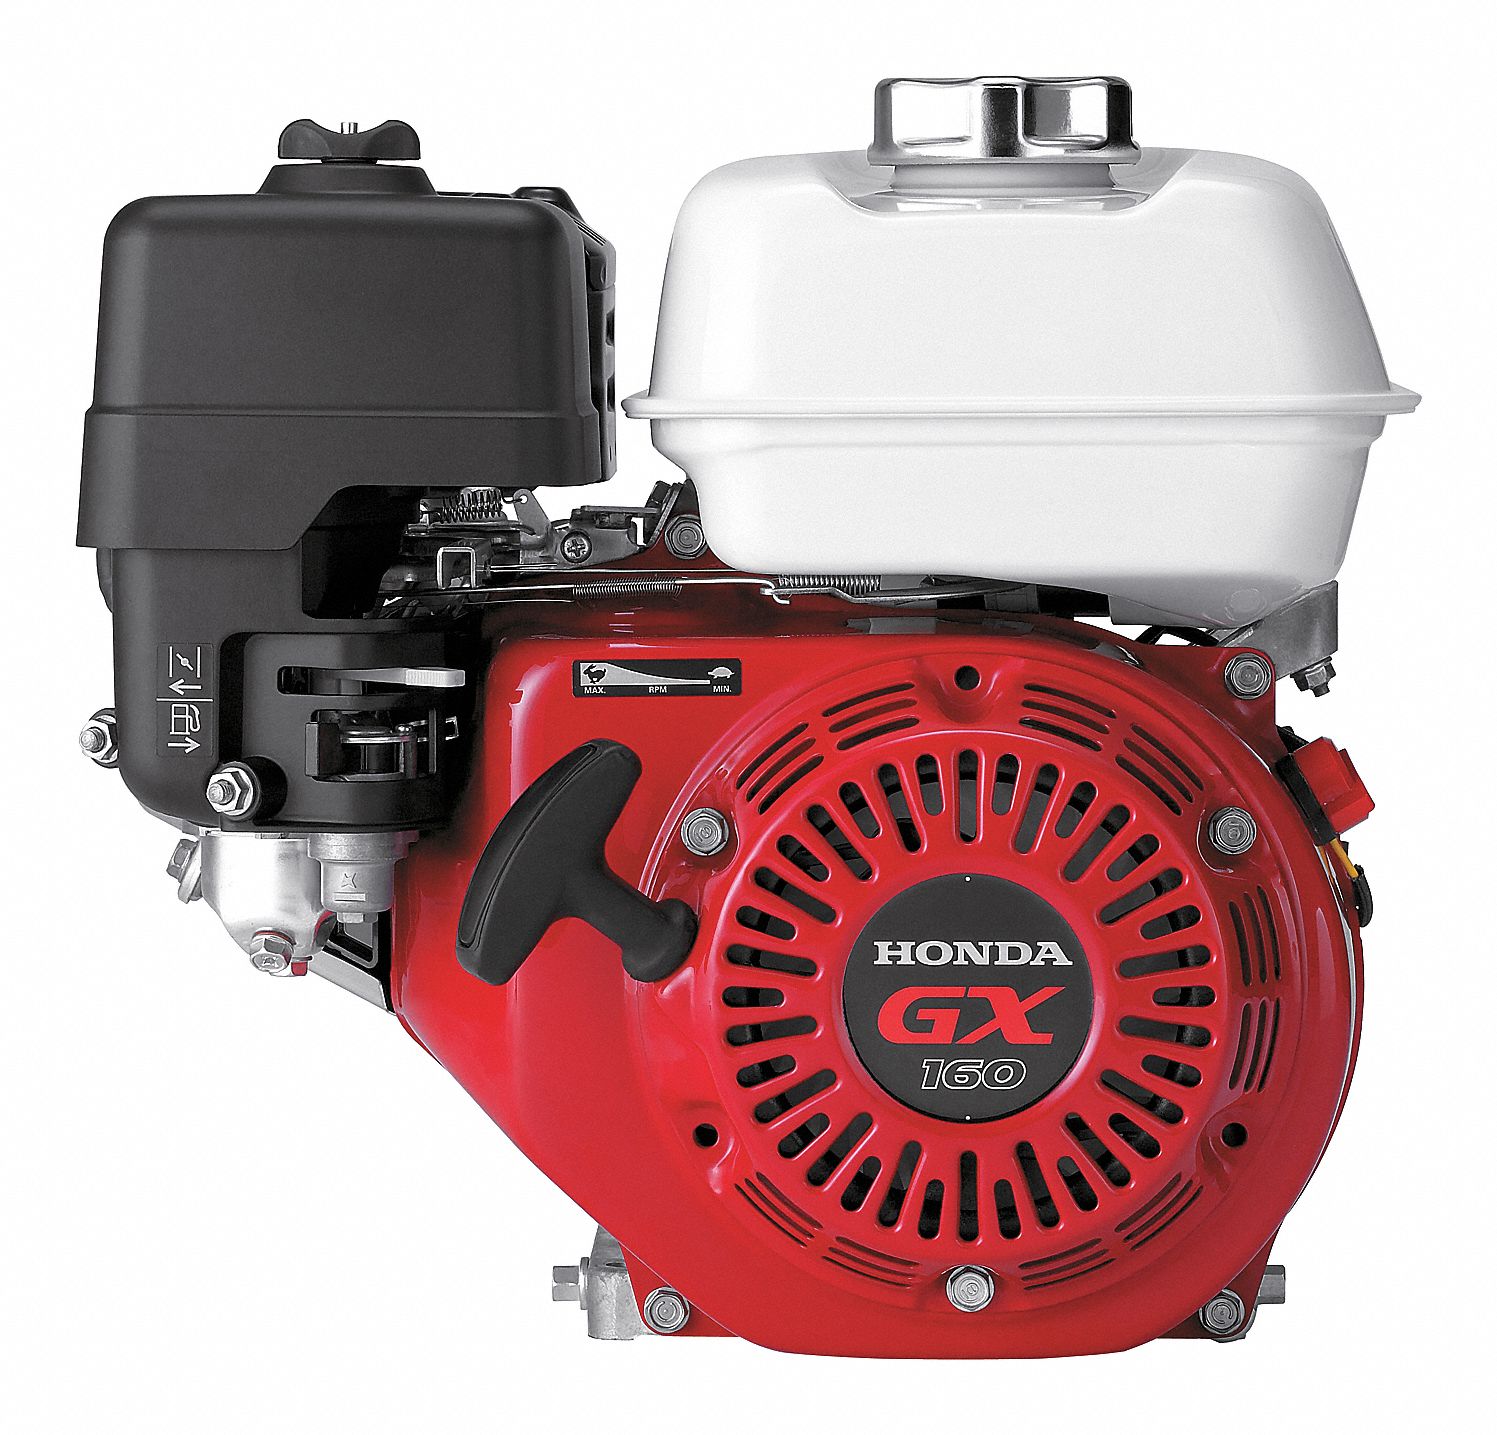 5 Pack Of In Tank Fuel Gas Filter Fits Honda Engines GX100 GX120 GX160 GX200